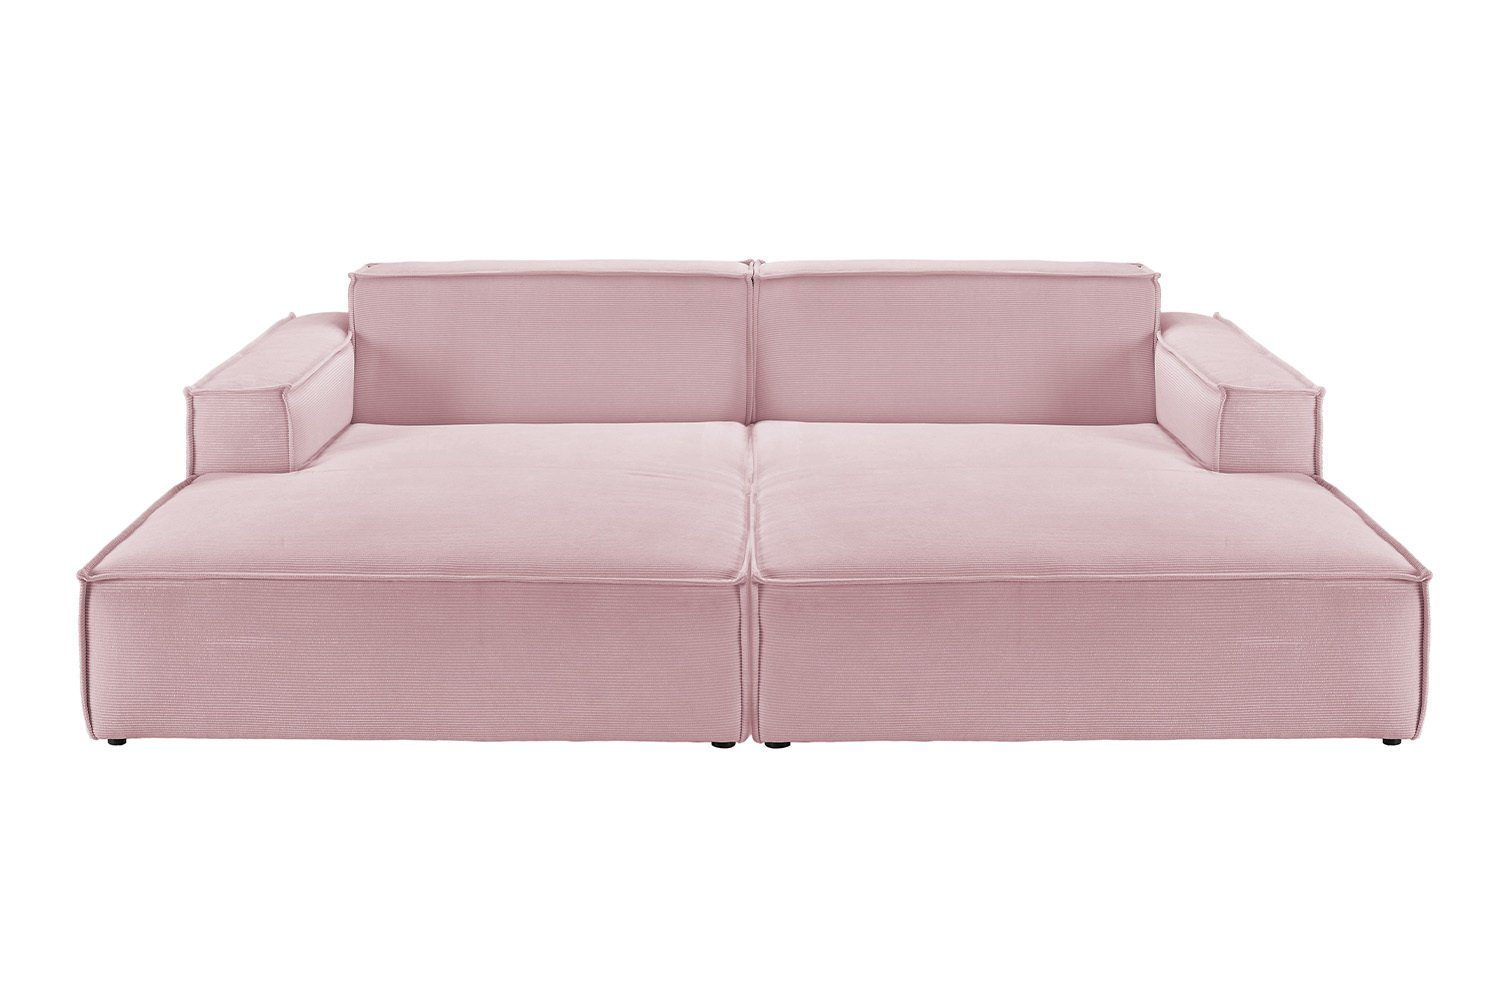 KAWOLA Farben Big-Sofa Feincord rosa SAMU, verschiedene Sofa